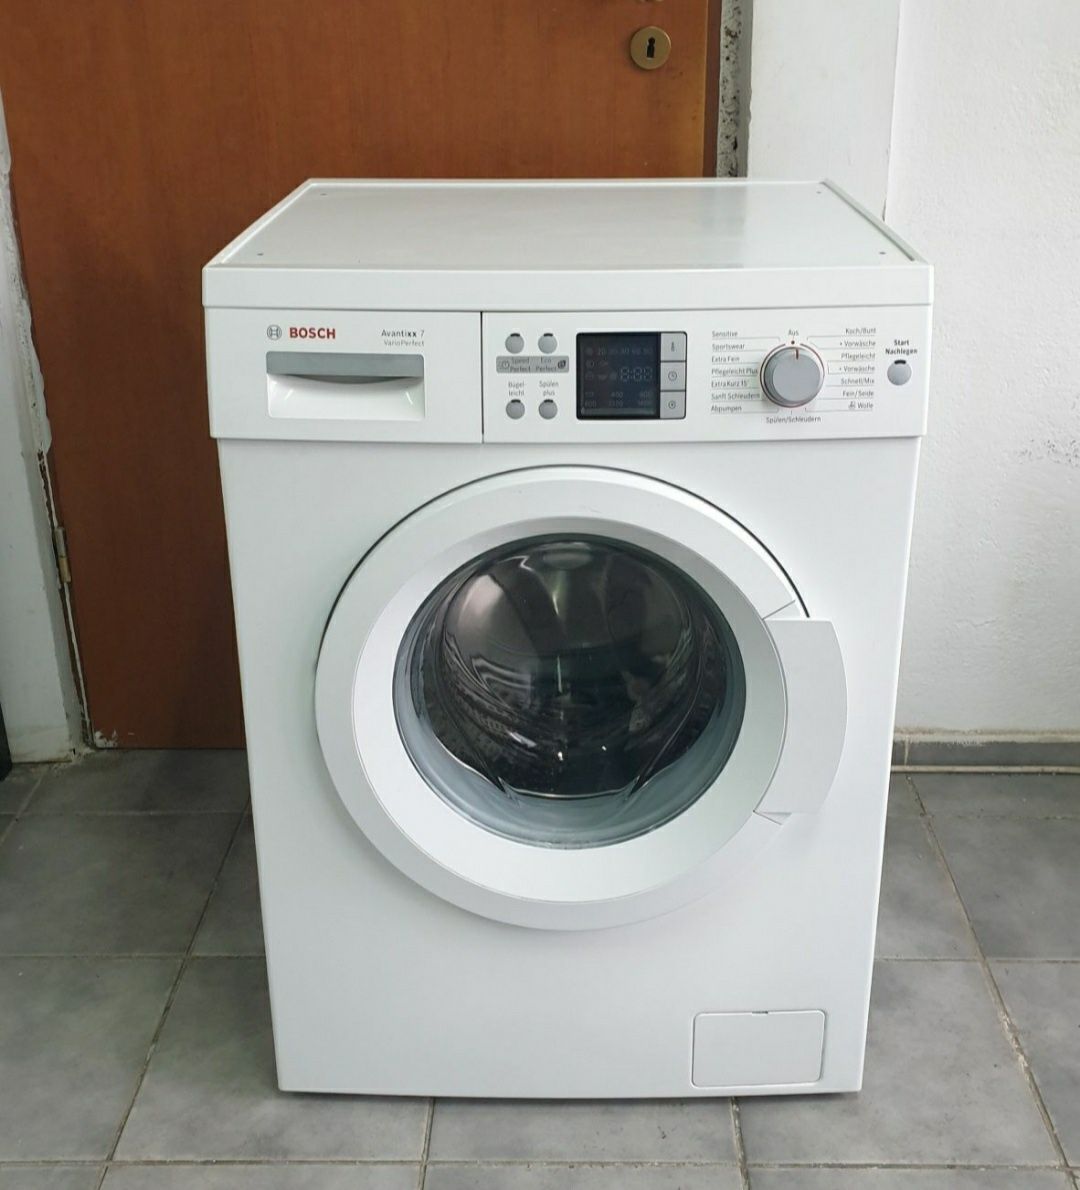 Masina de spălat rufe Bosch,  wsu 60442